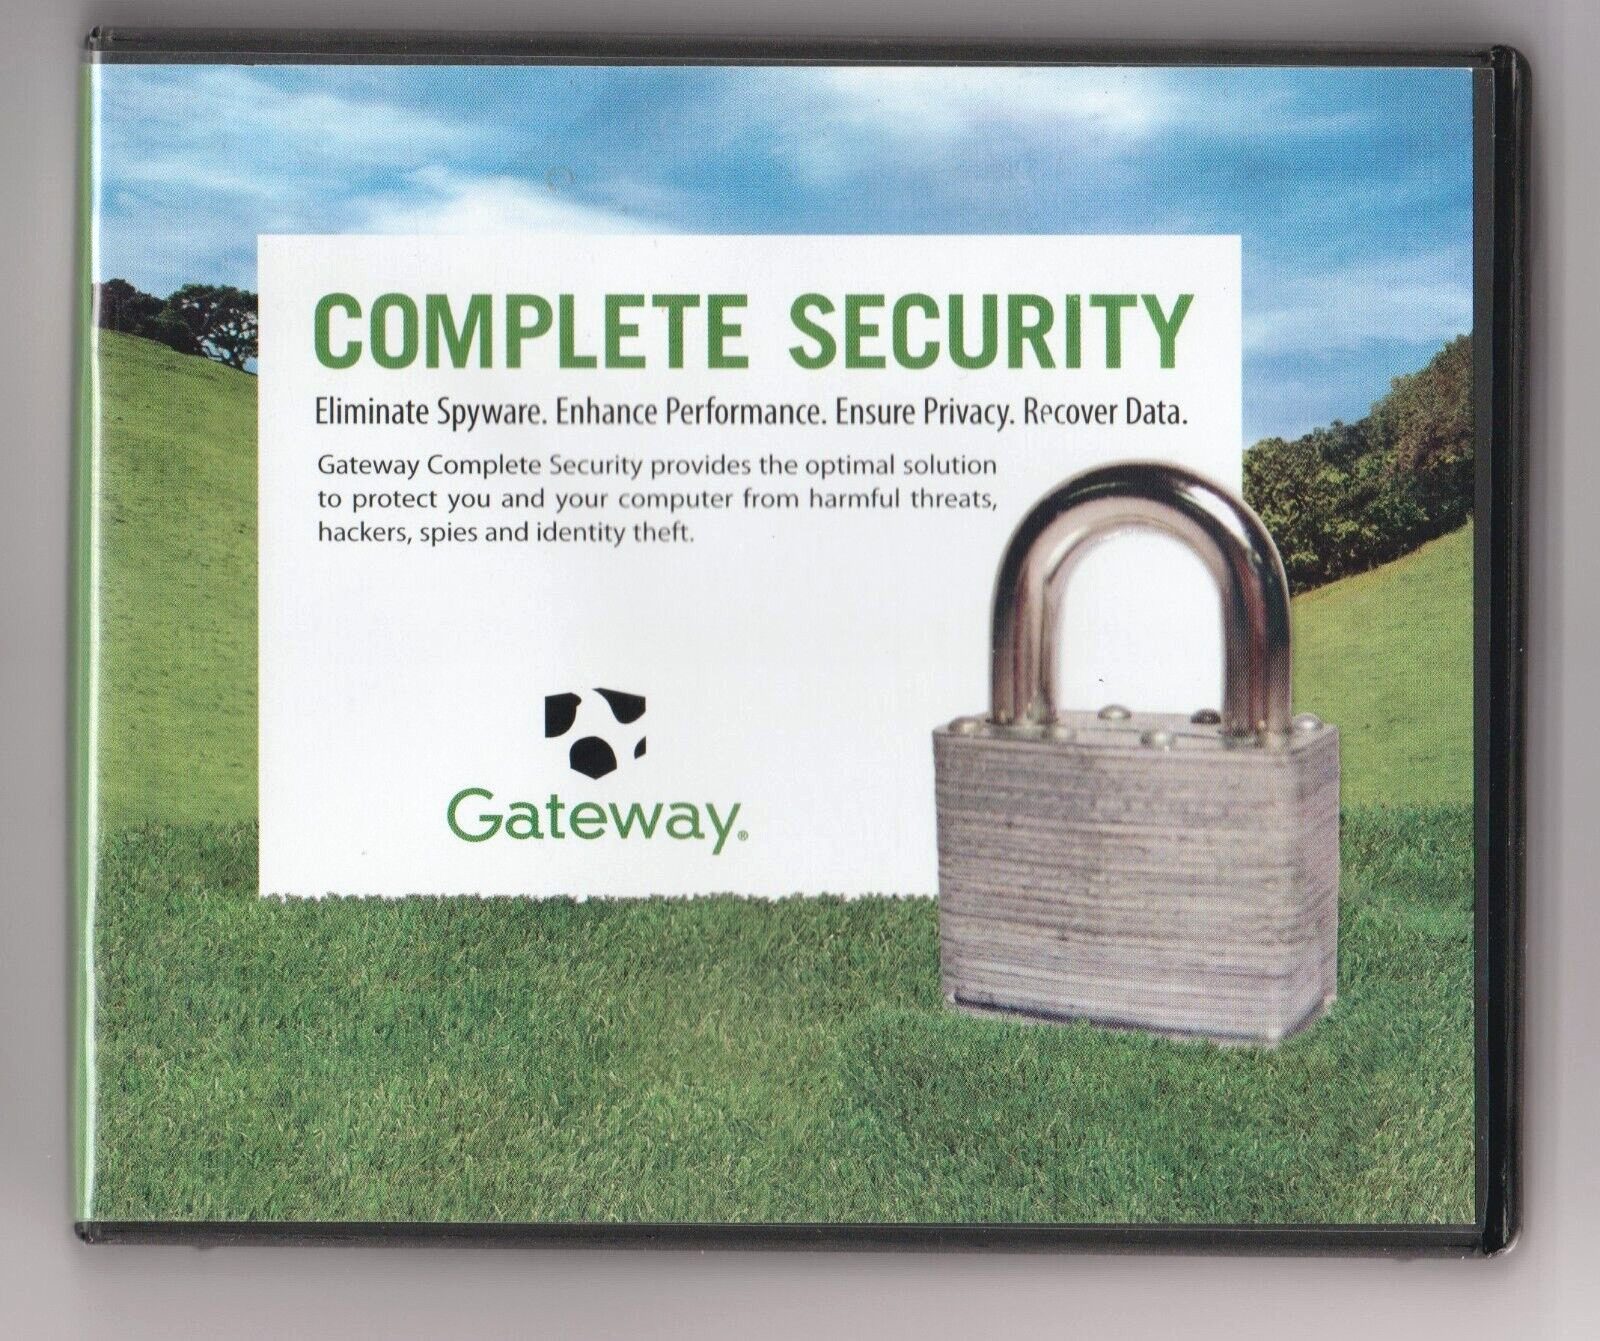 Gateway Complete Security Software Windows 2000 or XP in Original Box VTG EUC L1